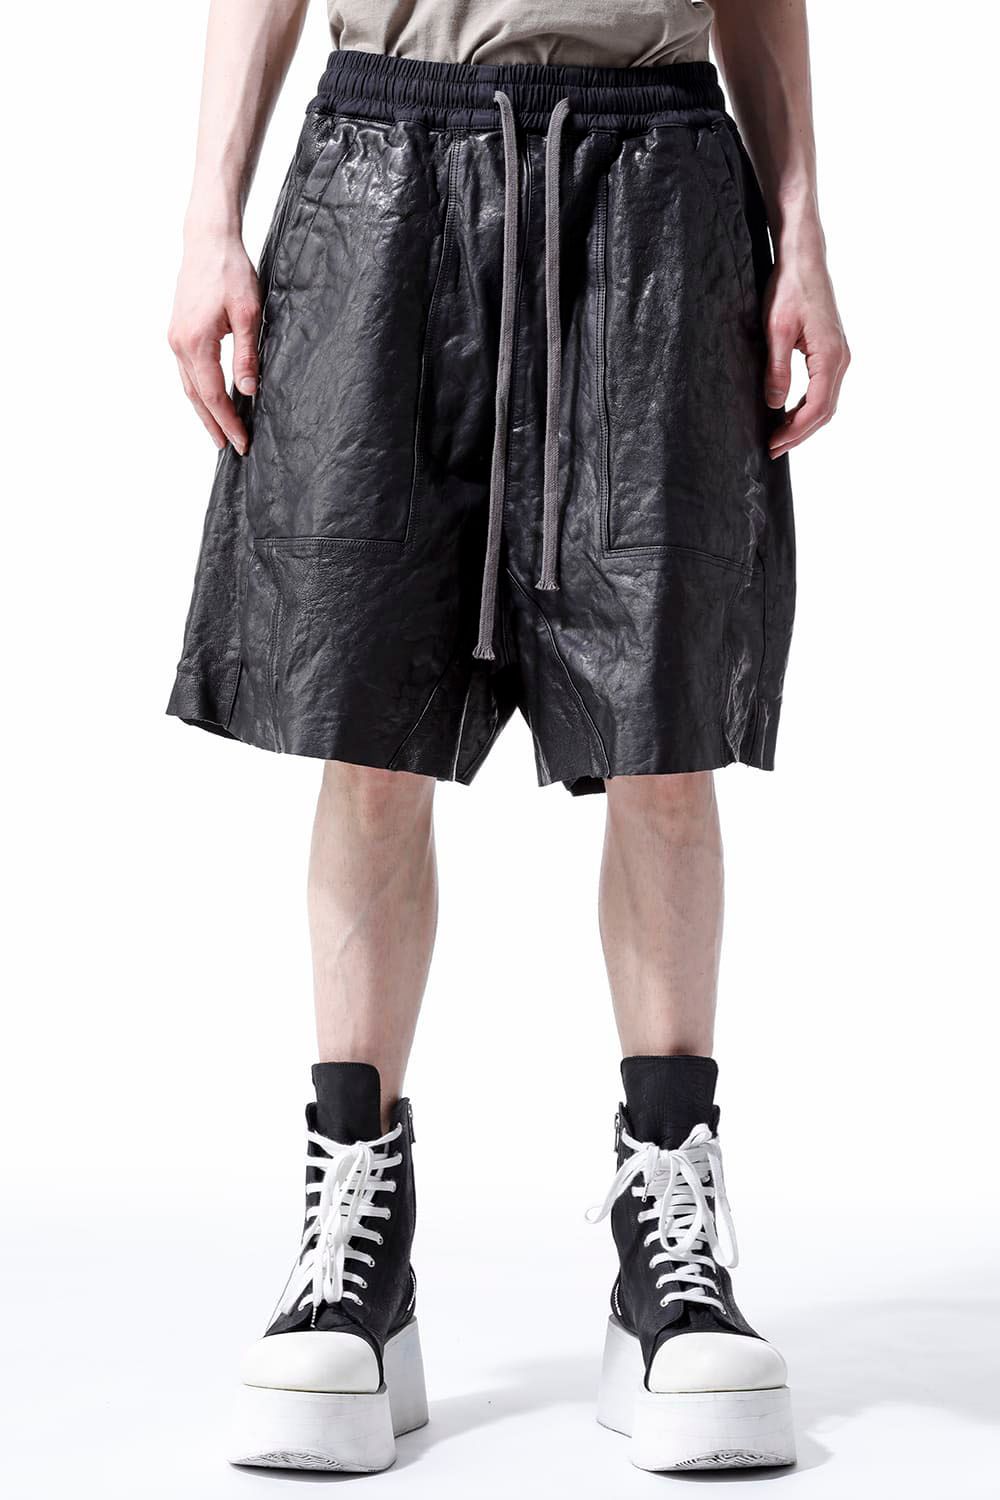 A.F ARTEFACT - 《先行予約ポイント5%》Leather Short Pants | Tempt